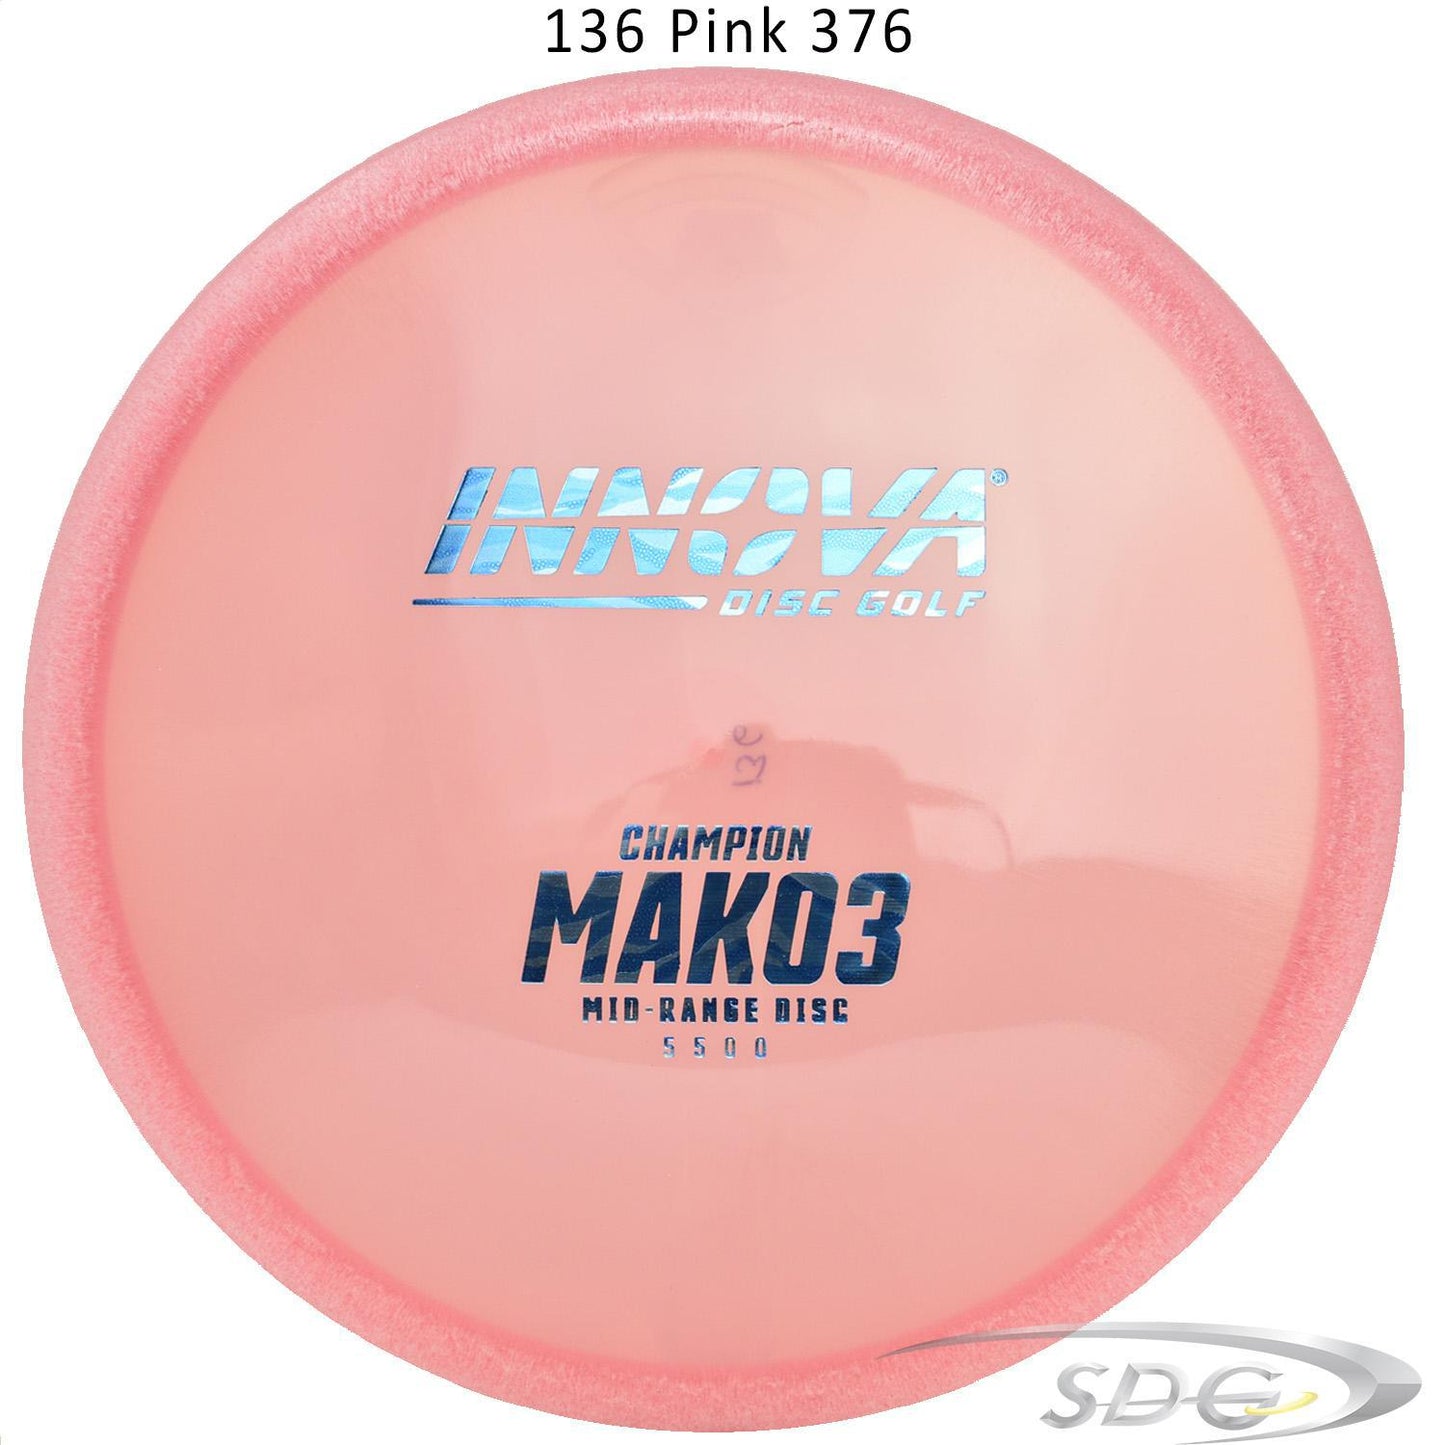 innova-champion-mako3-disc-golf-mid-range 136 Pink 376 